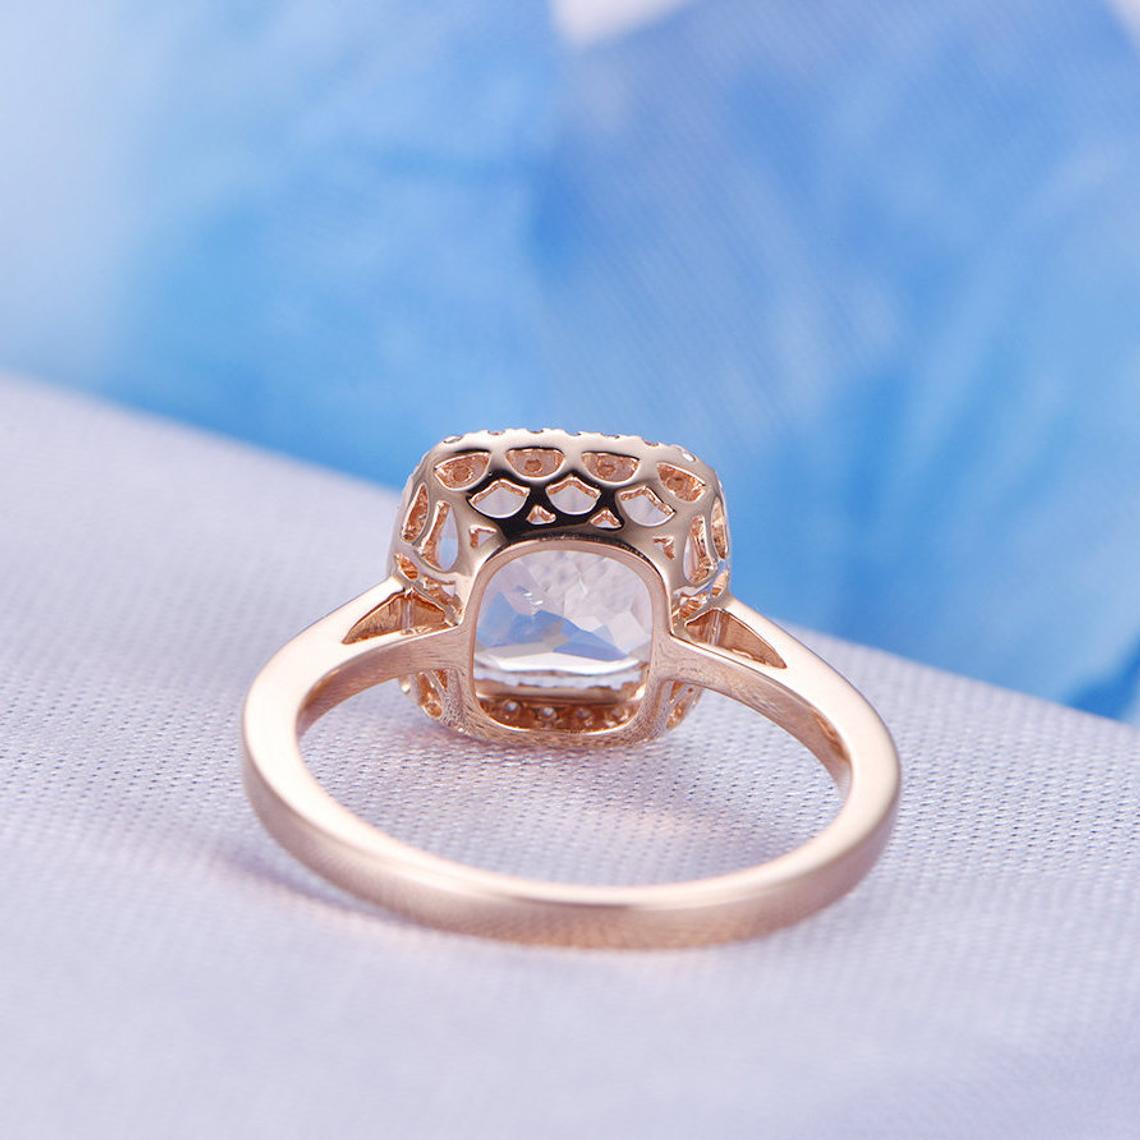 Cushion Morganite Ring Diamond Halo 14k Rose Gold - Lord of Gem Rings